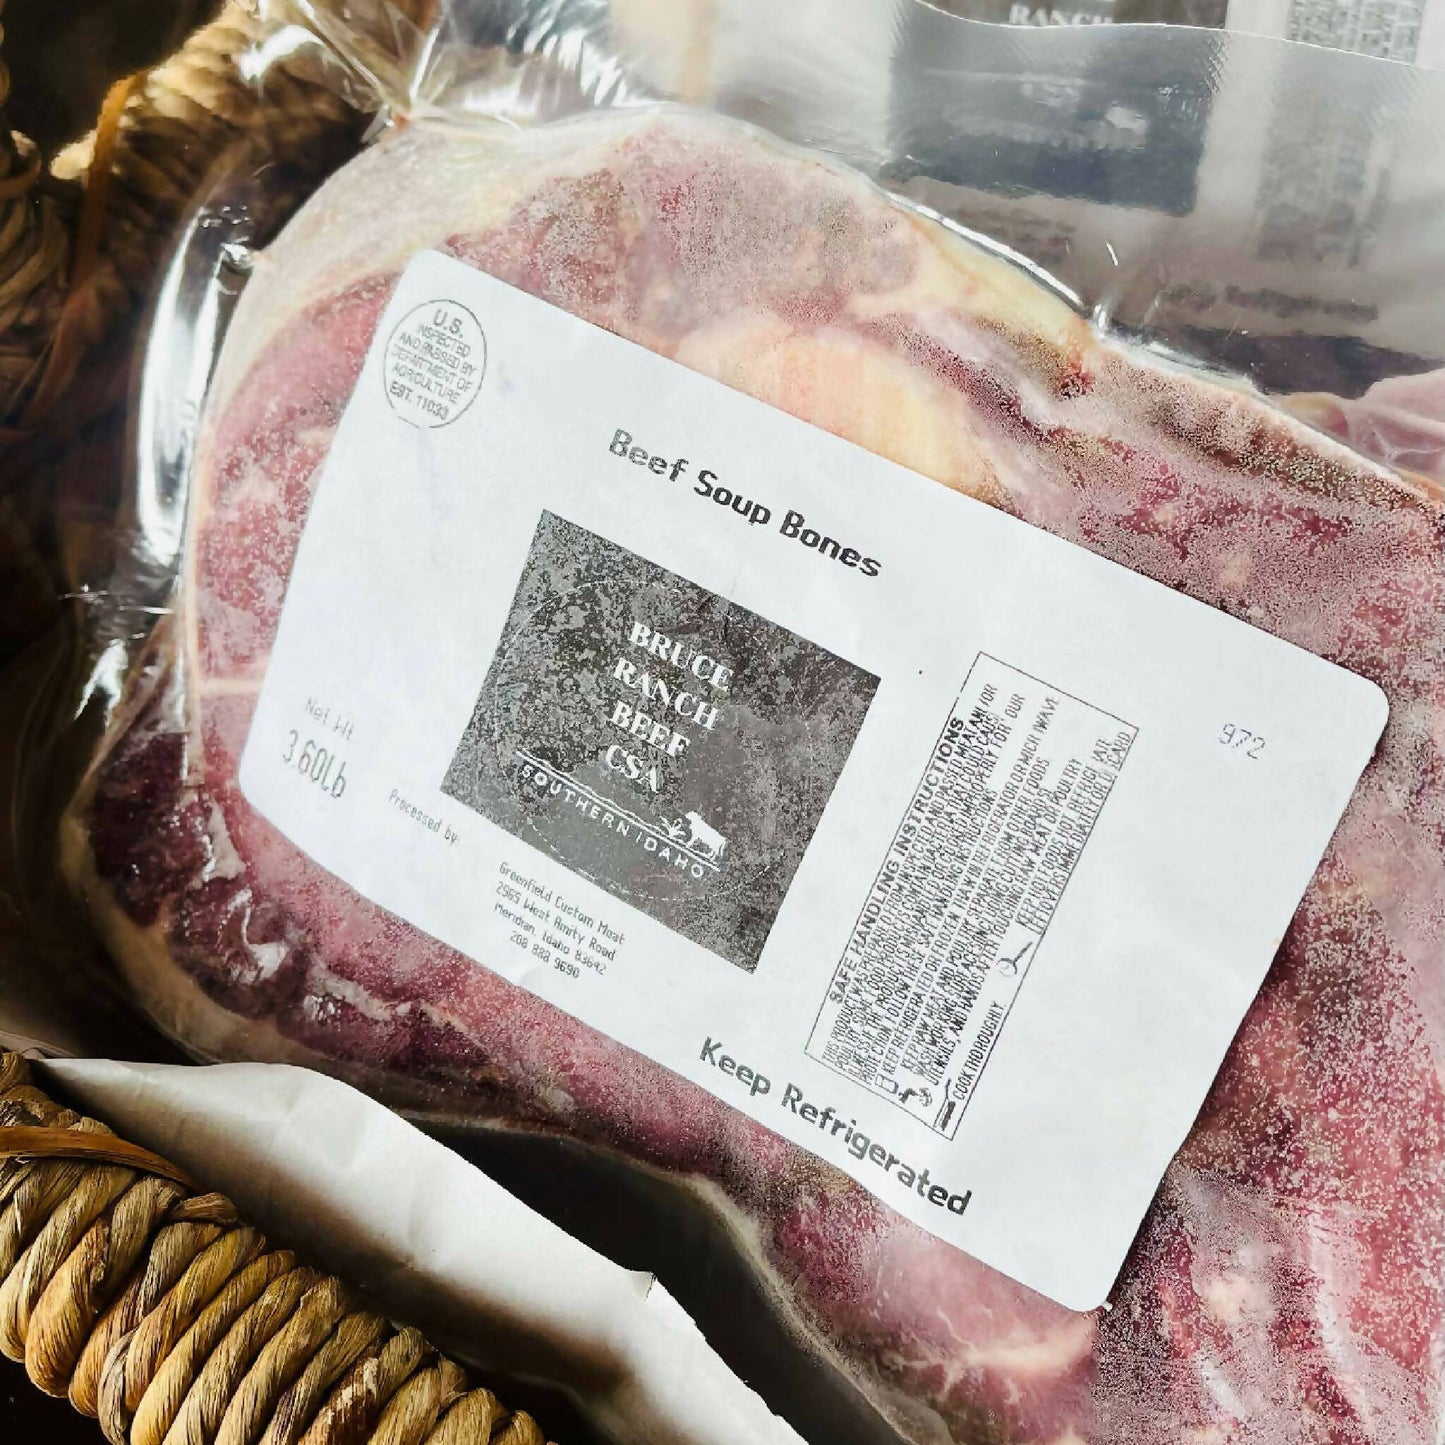 Meaty Soup Bones for Osso Bucco (1.4+ lbs)| Grass-Fed Angus